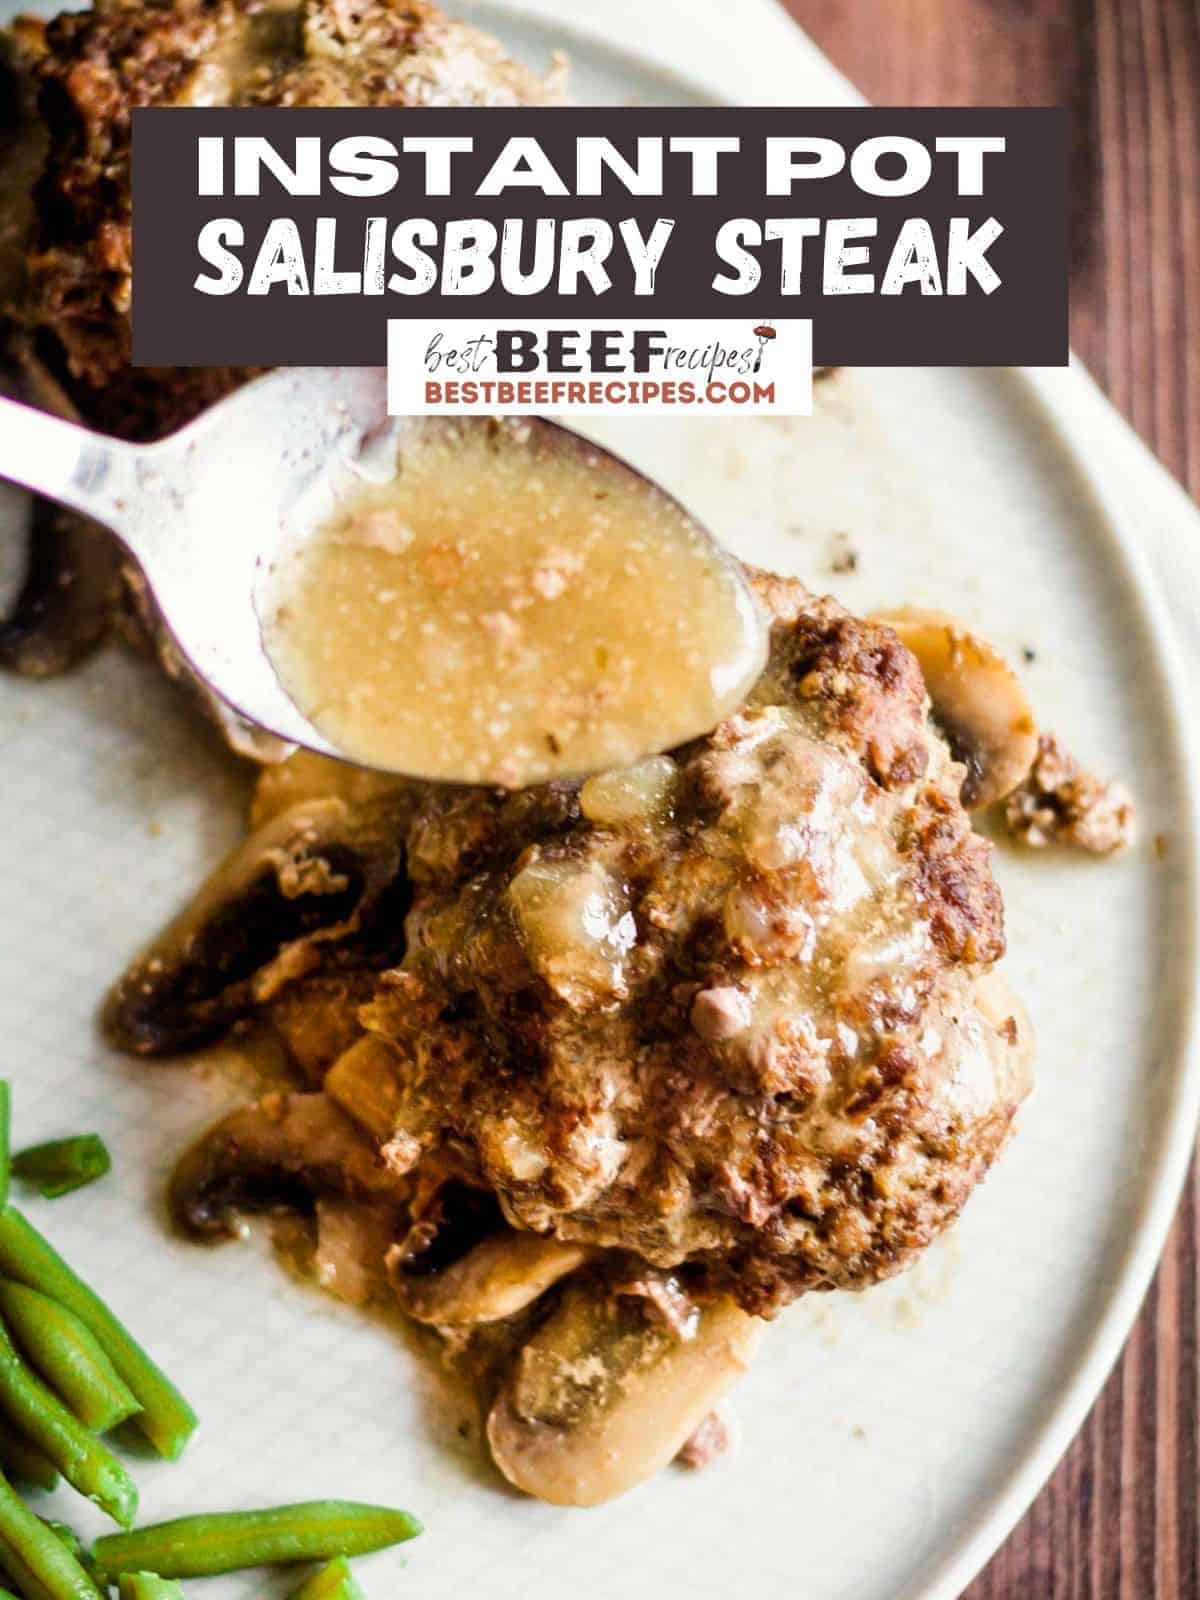 Pouring gravy over instant pot salisbury steak